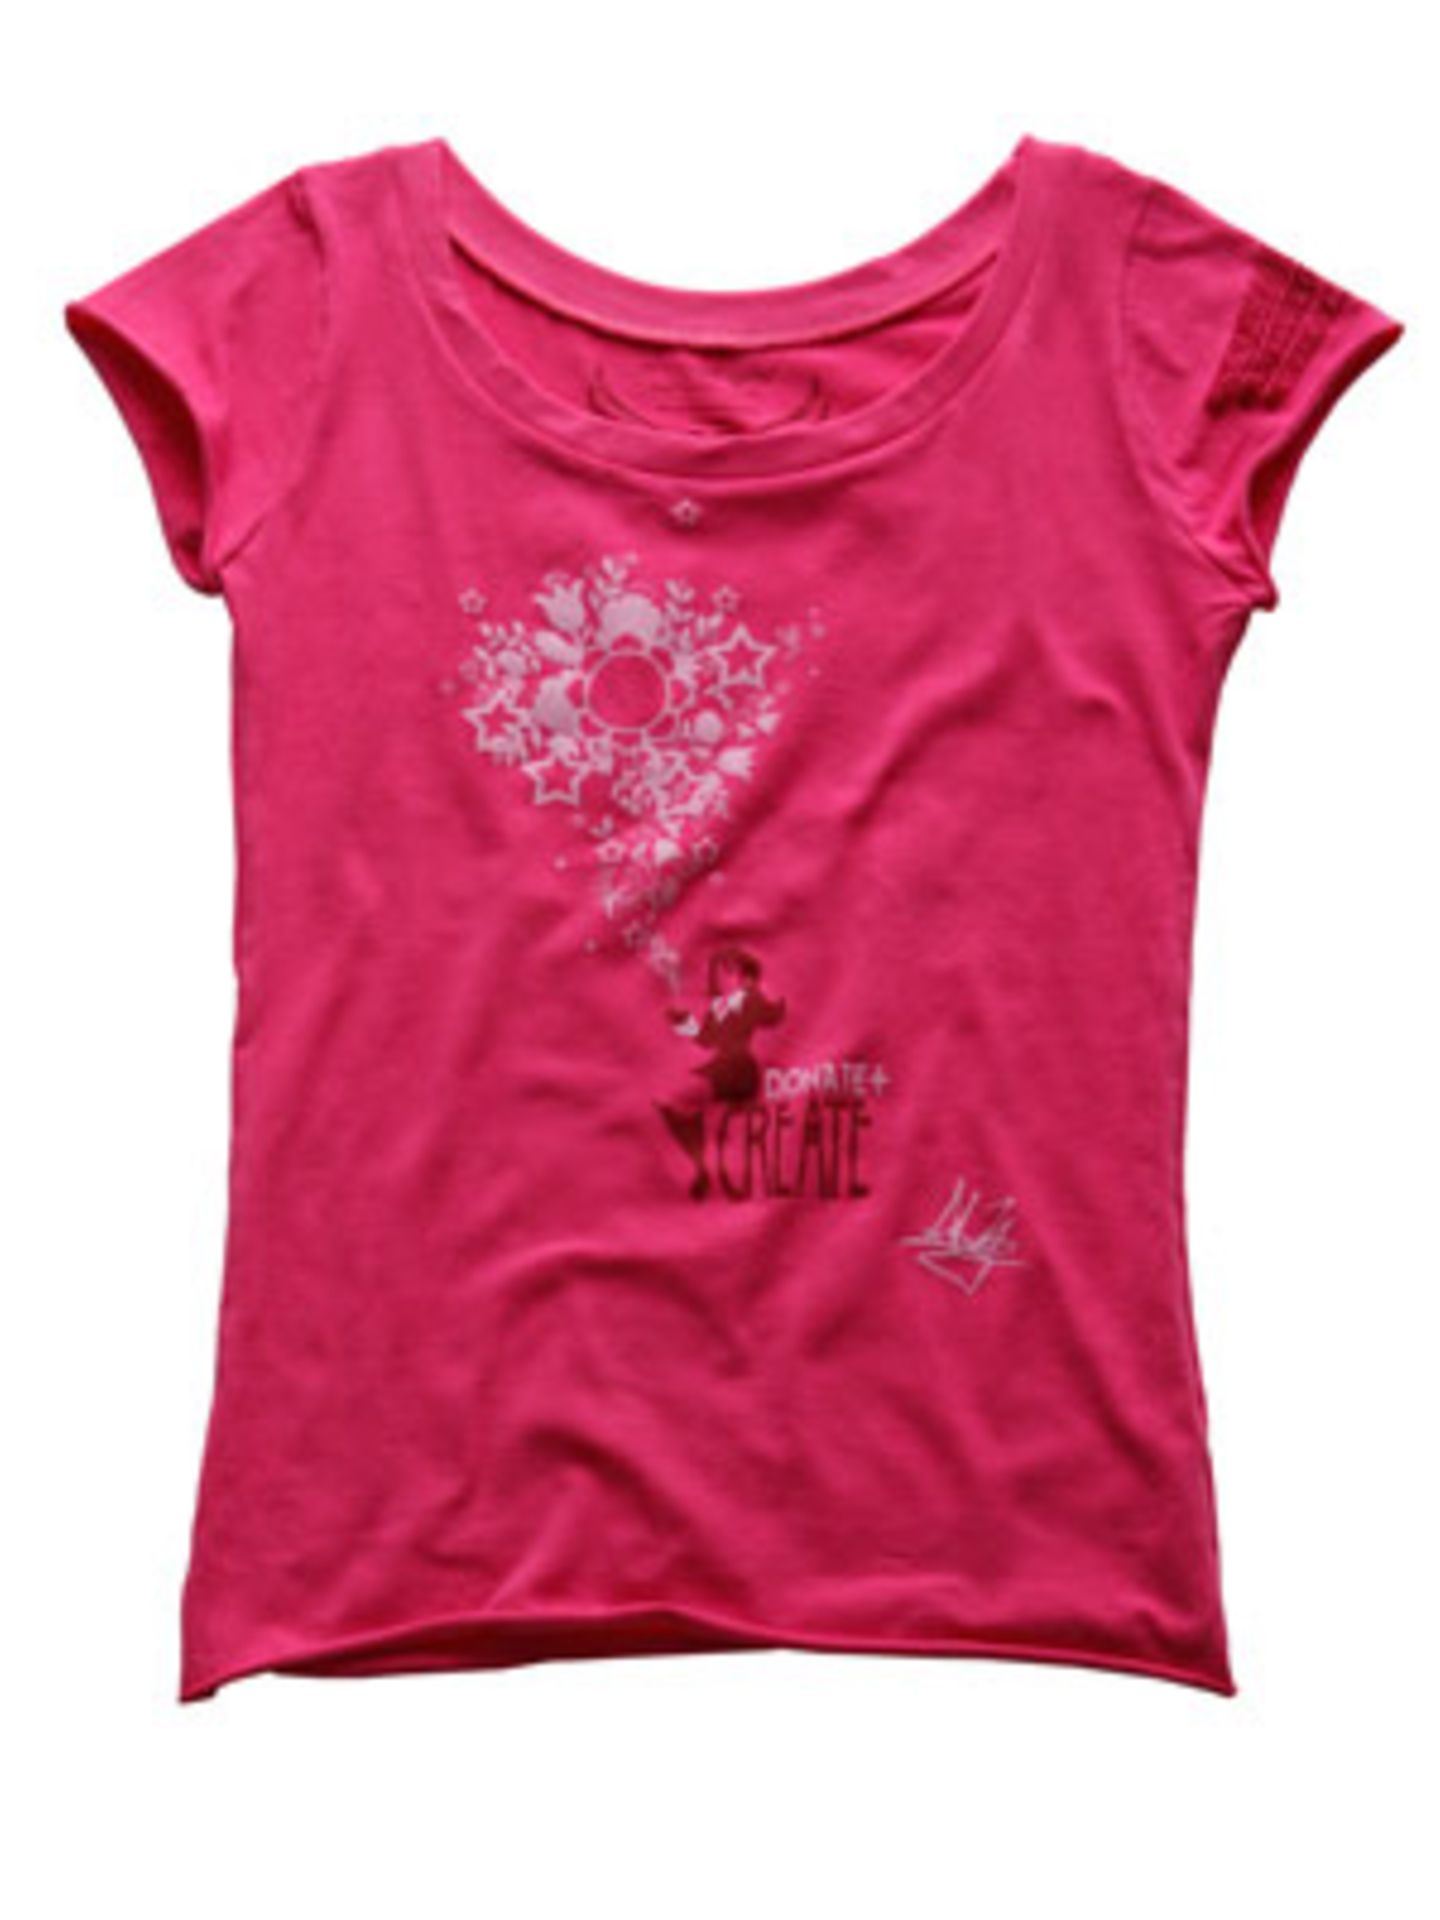 Eng anliegendes Girl-Shirt in Fuchsia mit extra kurzem Arm; aus 100 Prozent Fairtrade Cotton; 29,90 Euro; inkl. MwSt./zzgl. Versandkosten; über >> www.armedangels.de